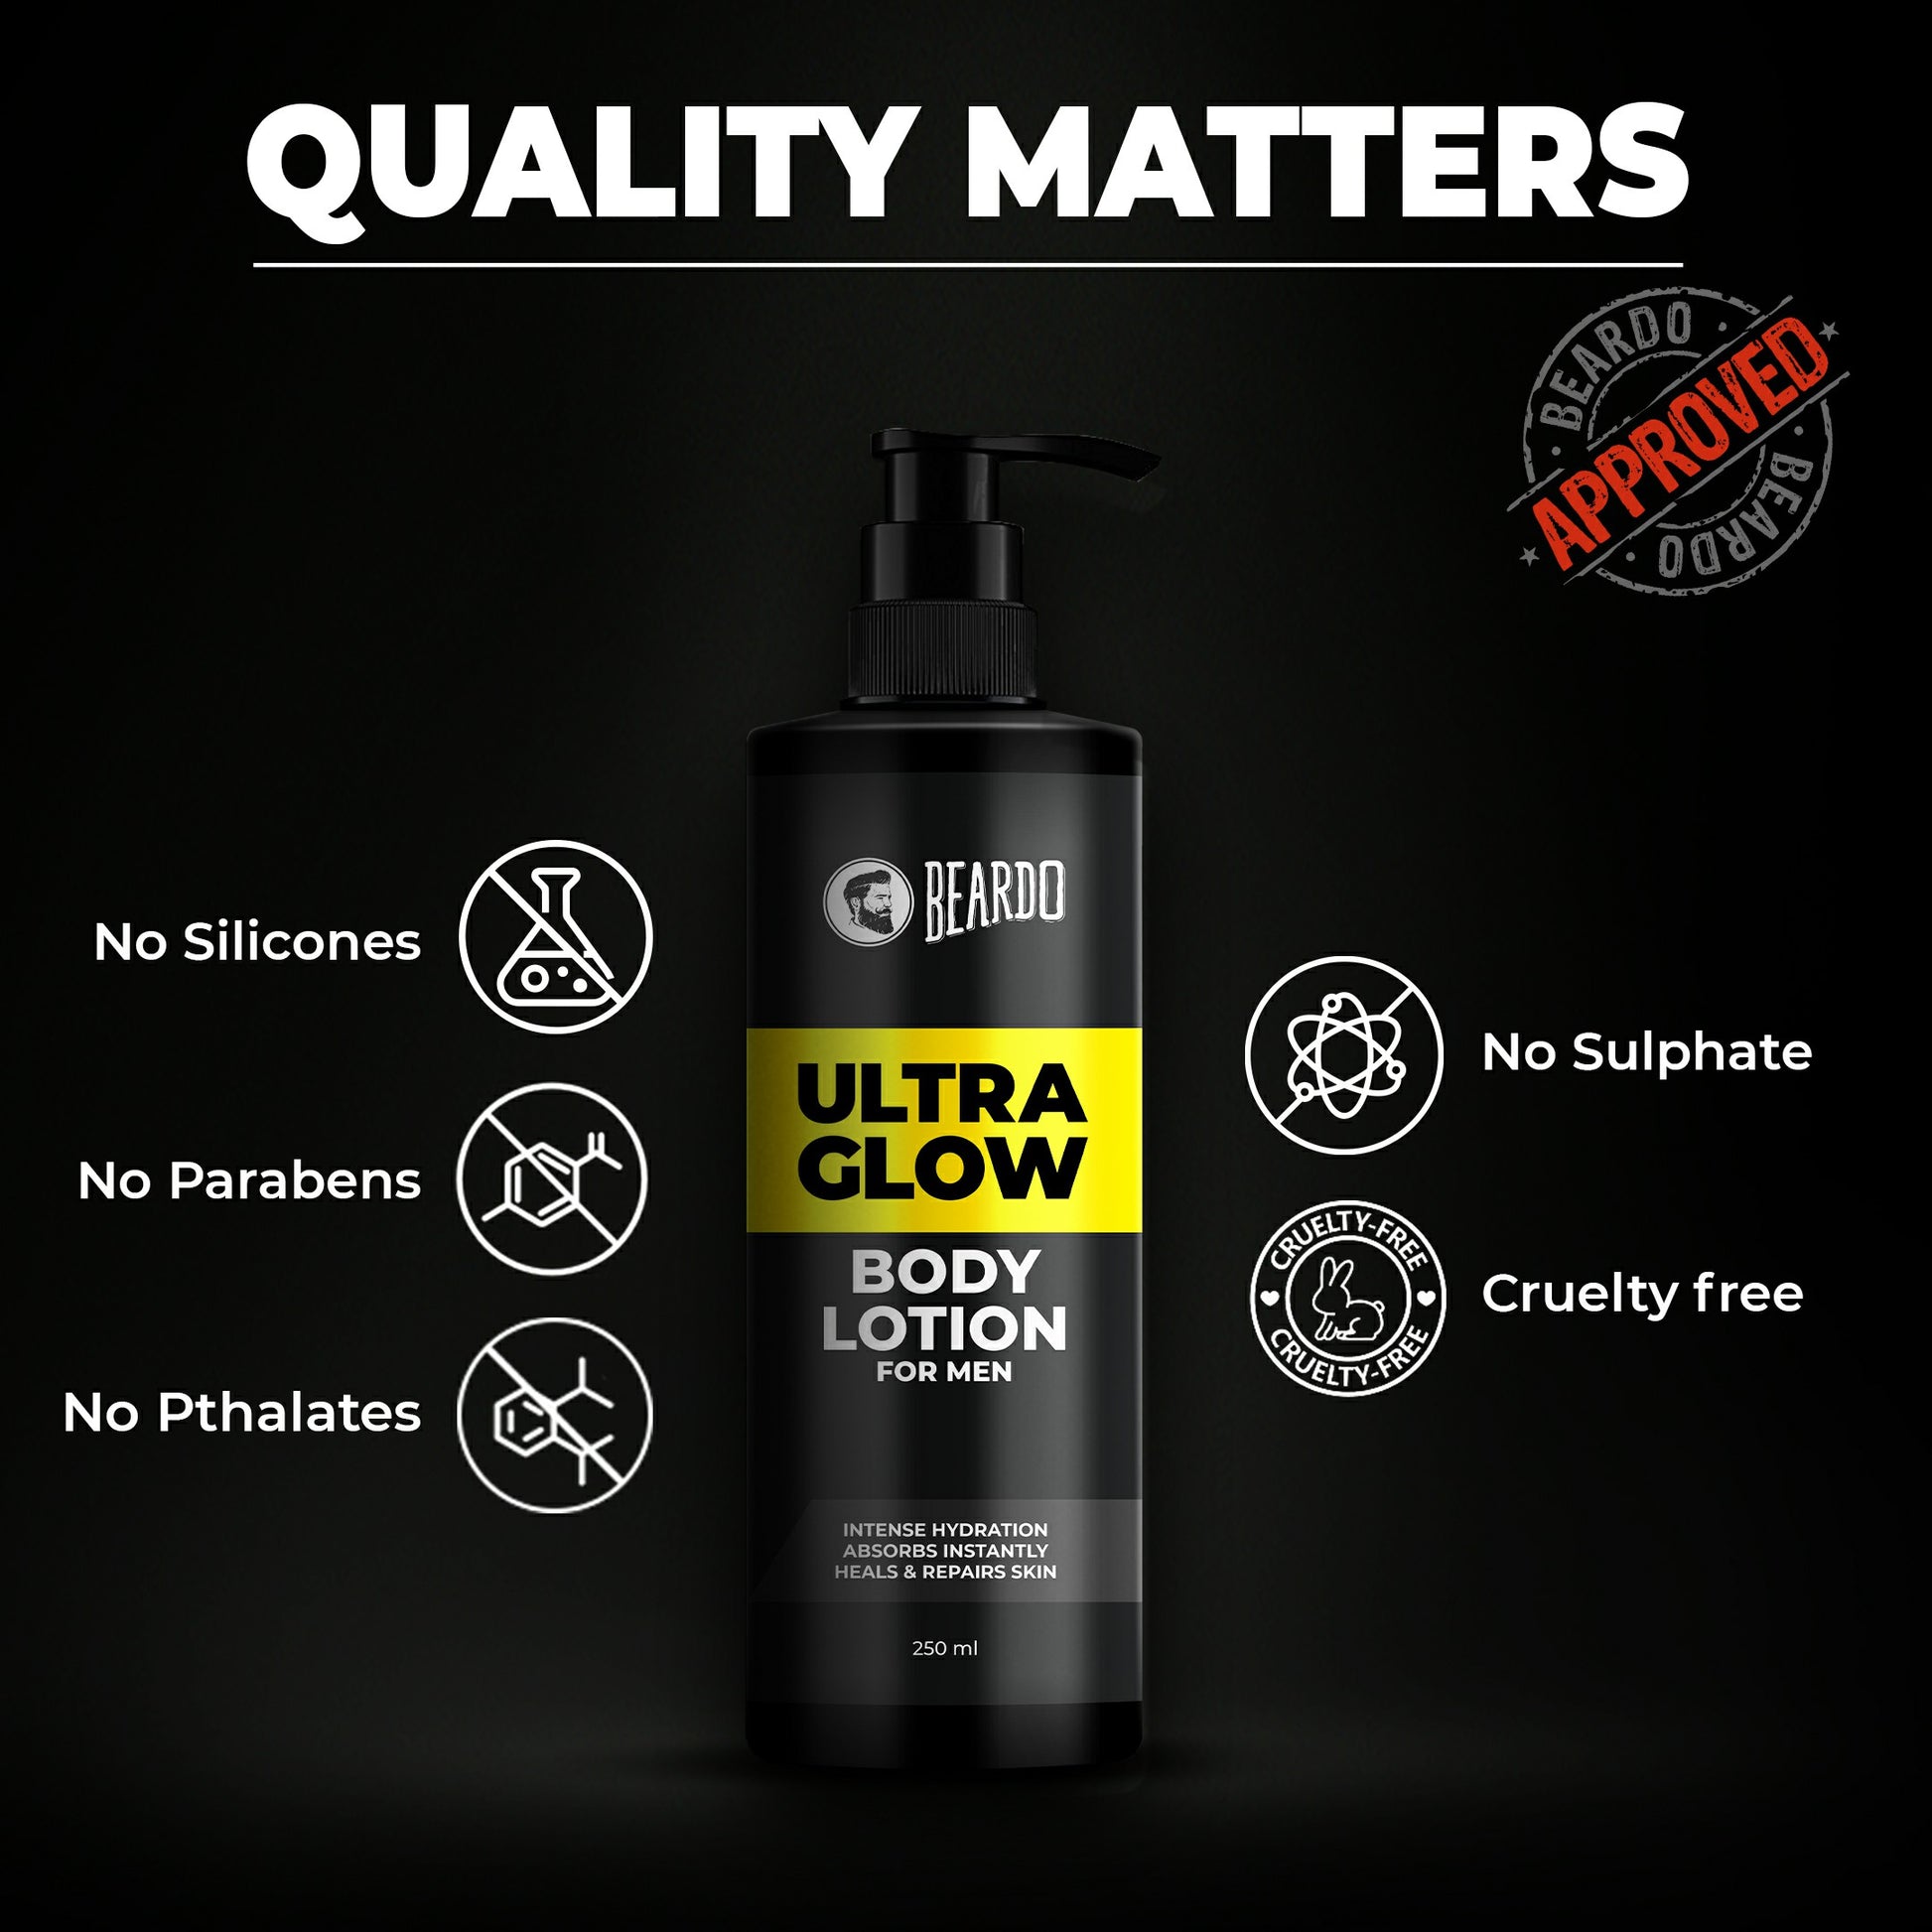 quality matters, no silicones, no pthalates, no parabens, no sulphate, cruelty free